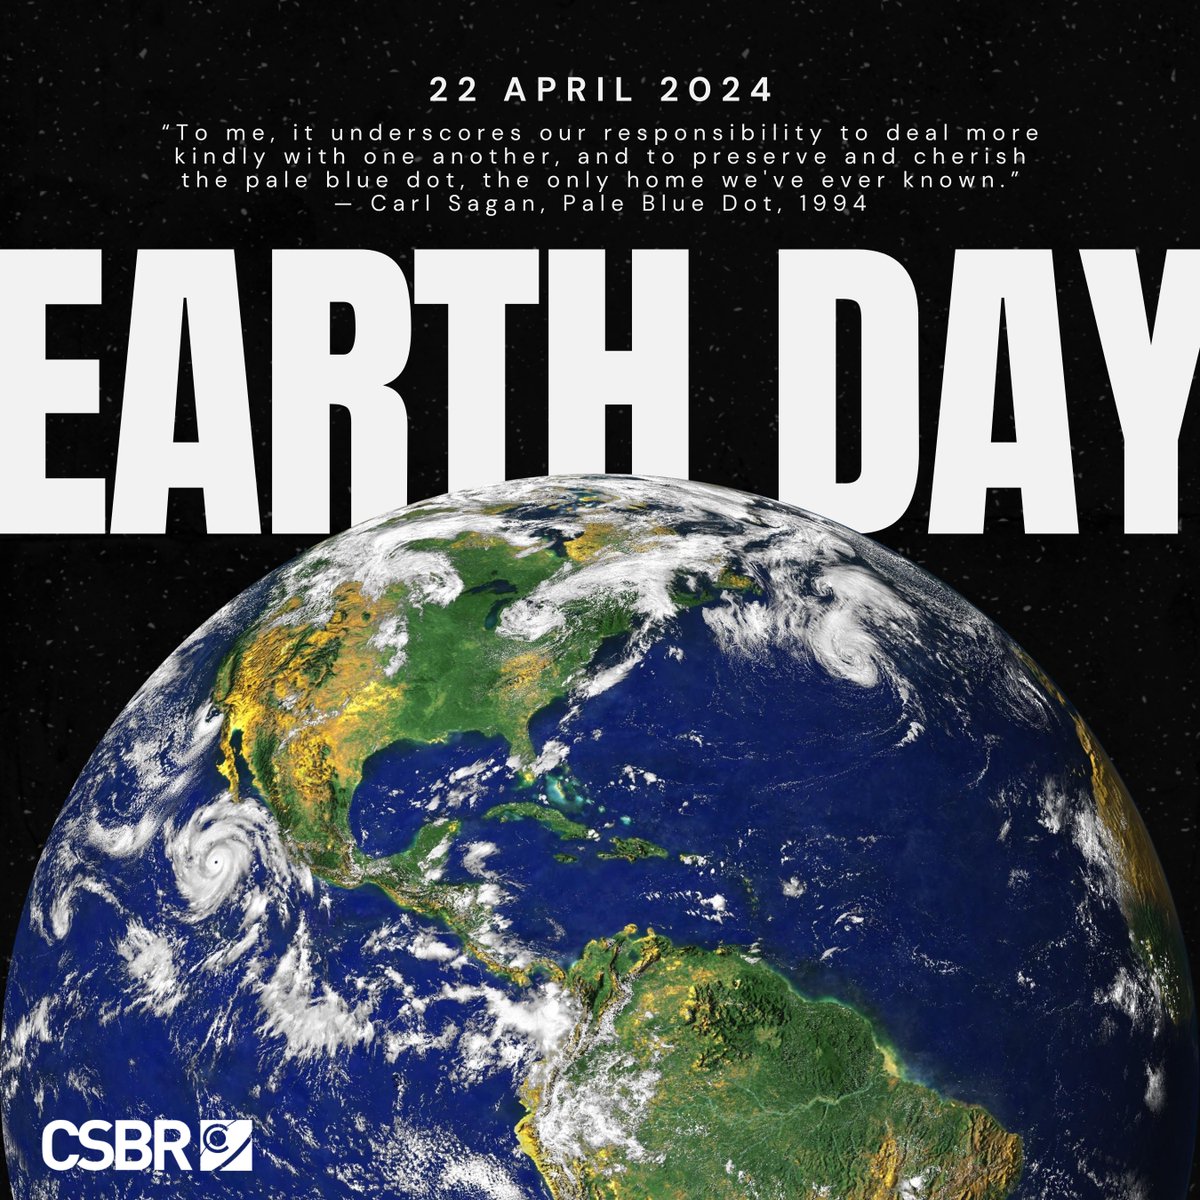 Happy Earth Day, 2024! 

#EarthDay #Space #Aerospace #CarlSagan #Earth #PaleBlueDot